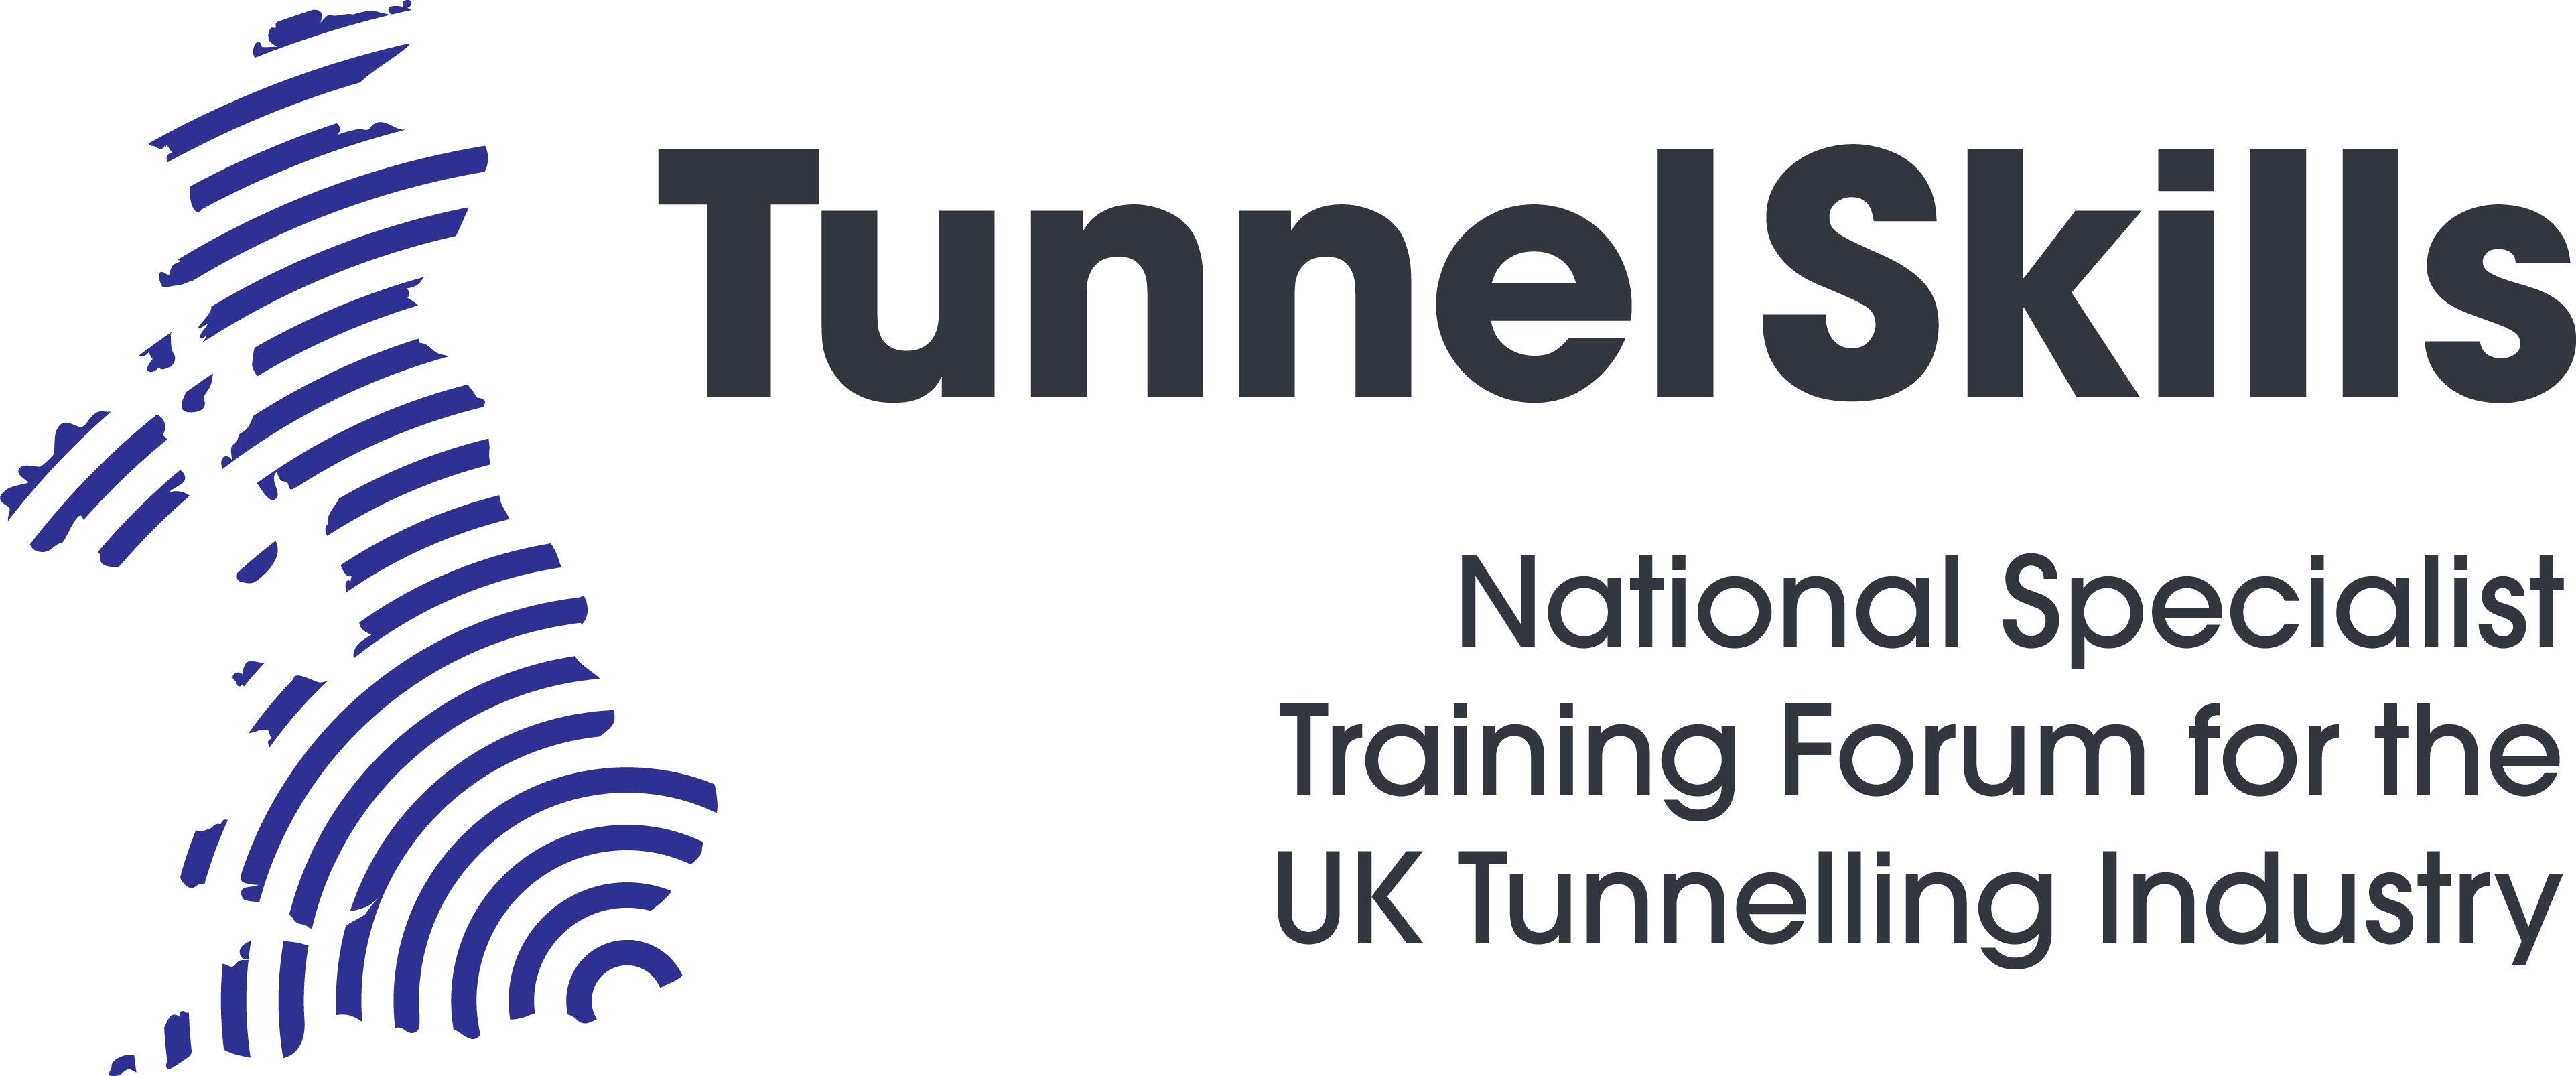 Tunnel SKills 